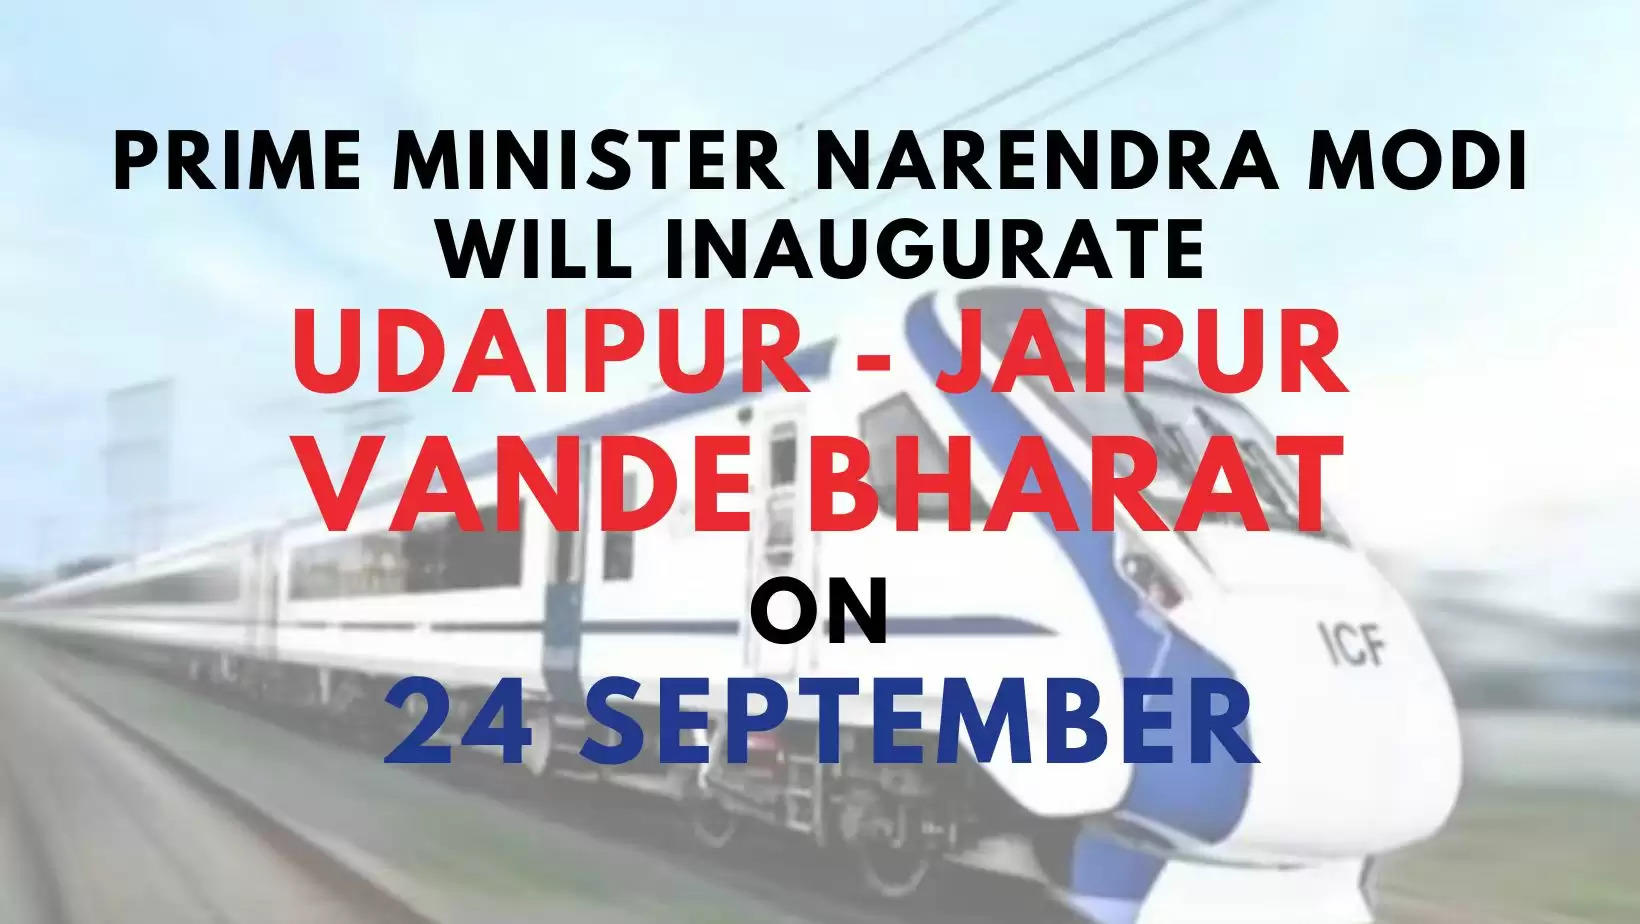 Udaipur Jaipur Vande Bharat Prime Minister Narendra Modi 24 September